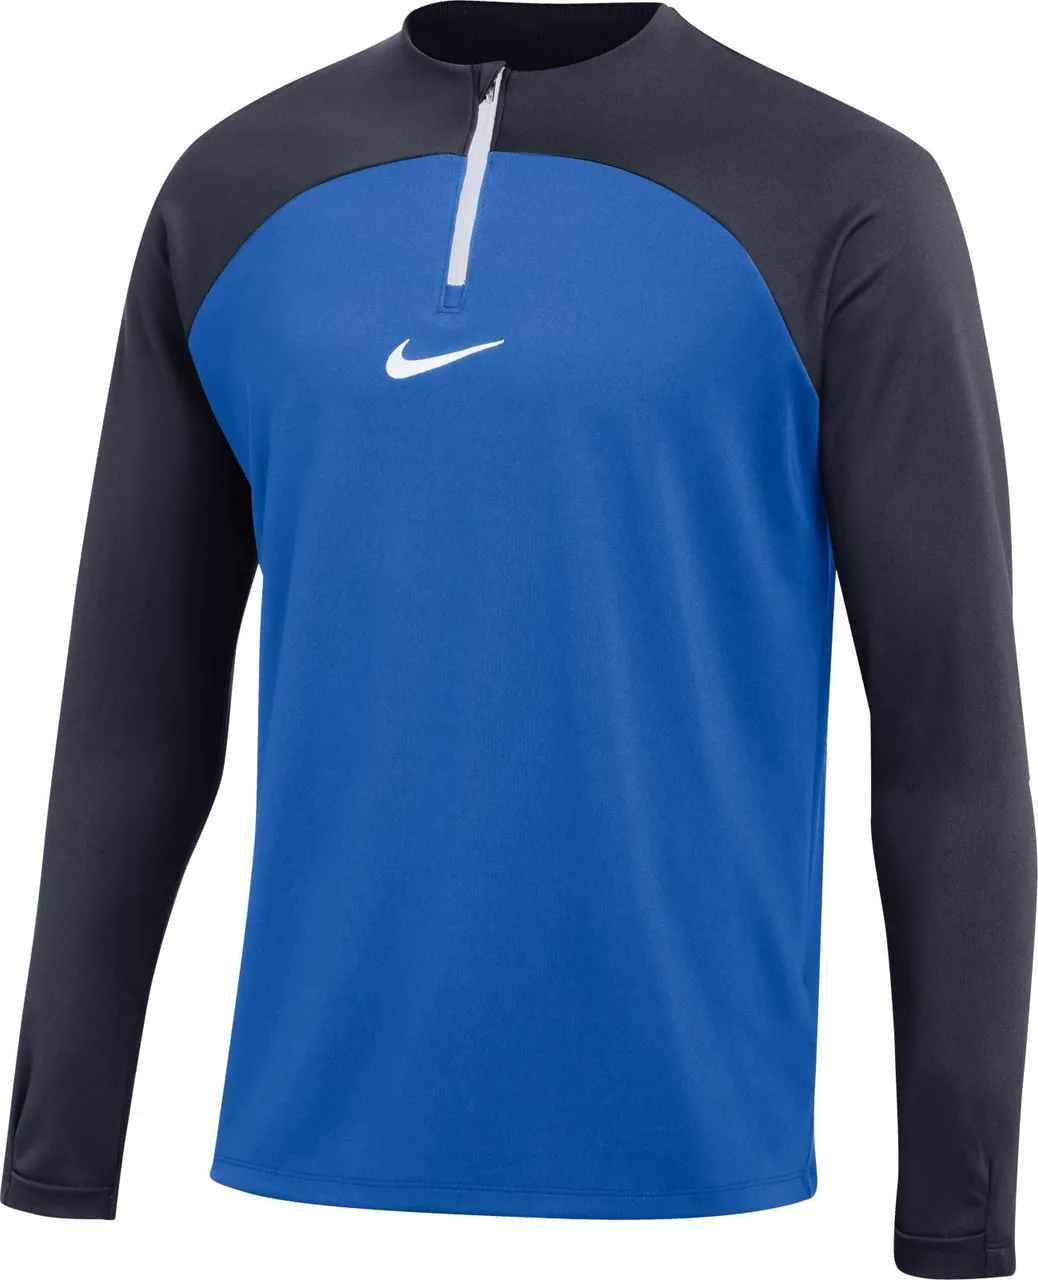 Nike DH9230-463 M Nk Df Acdpr Dril Top K Sweatshirt Men's